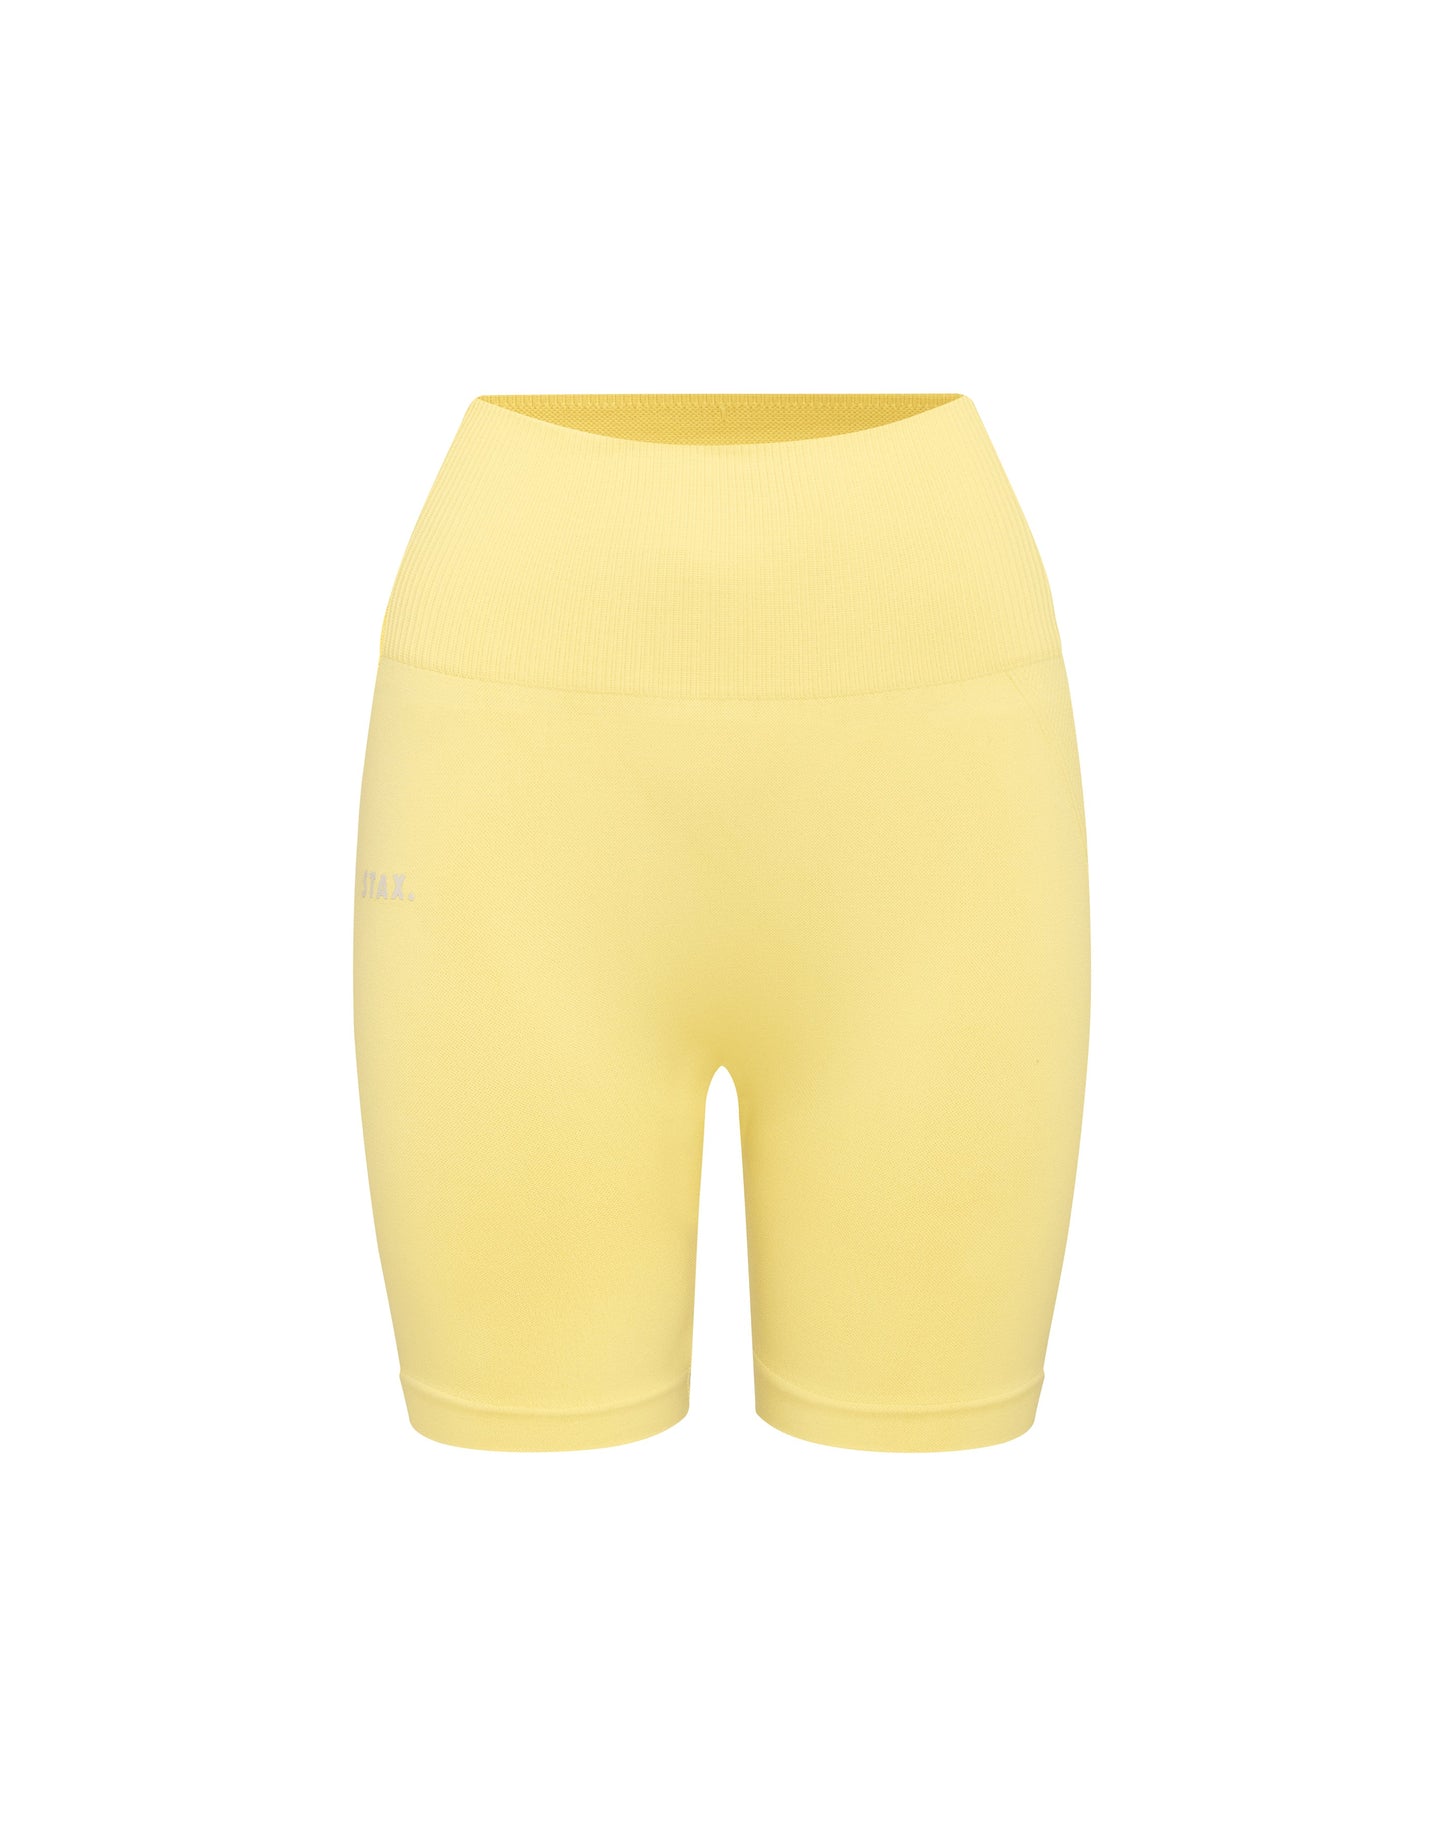 STAX. Premium Seamless V4 Midi Bike Shorts - Flaxen Yellow